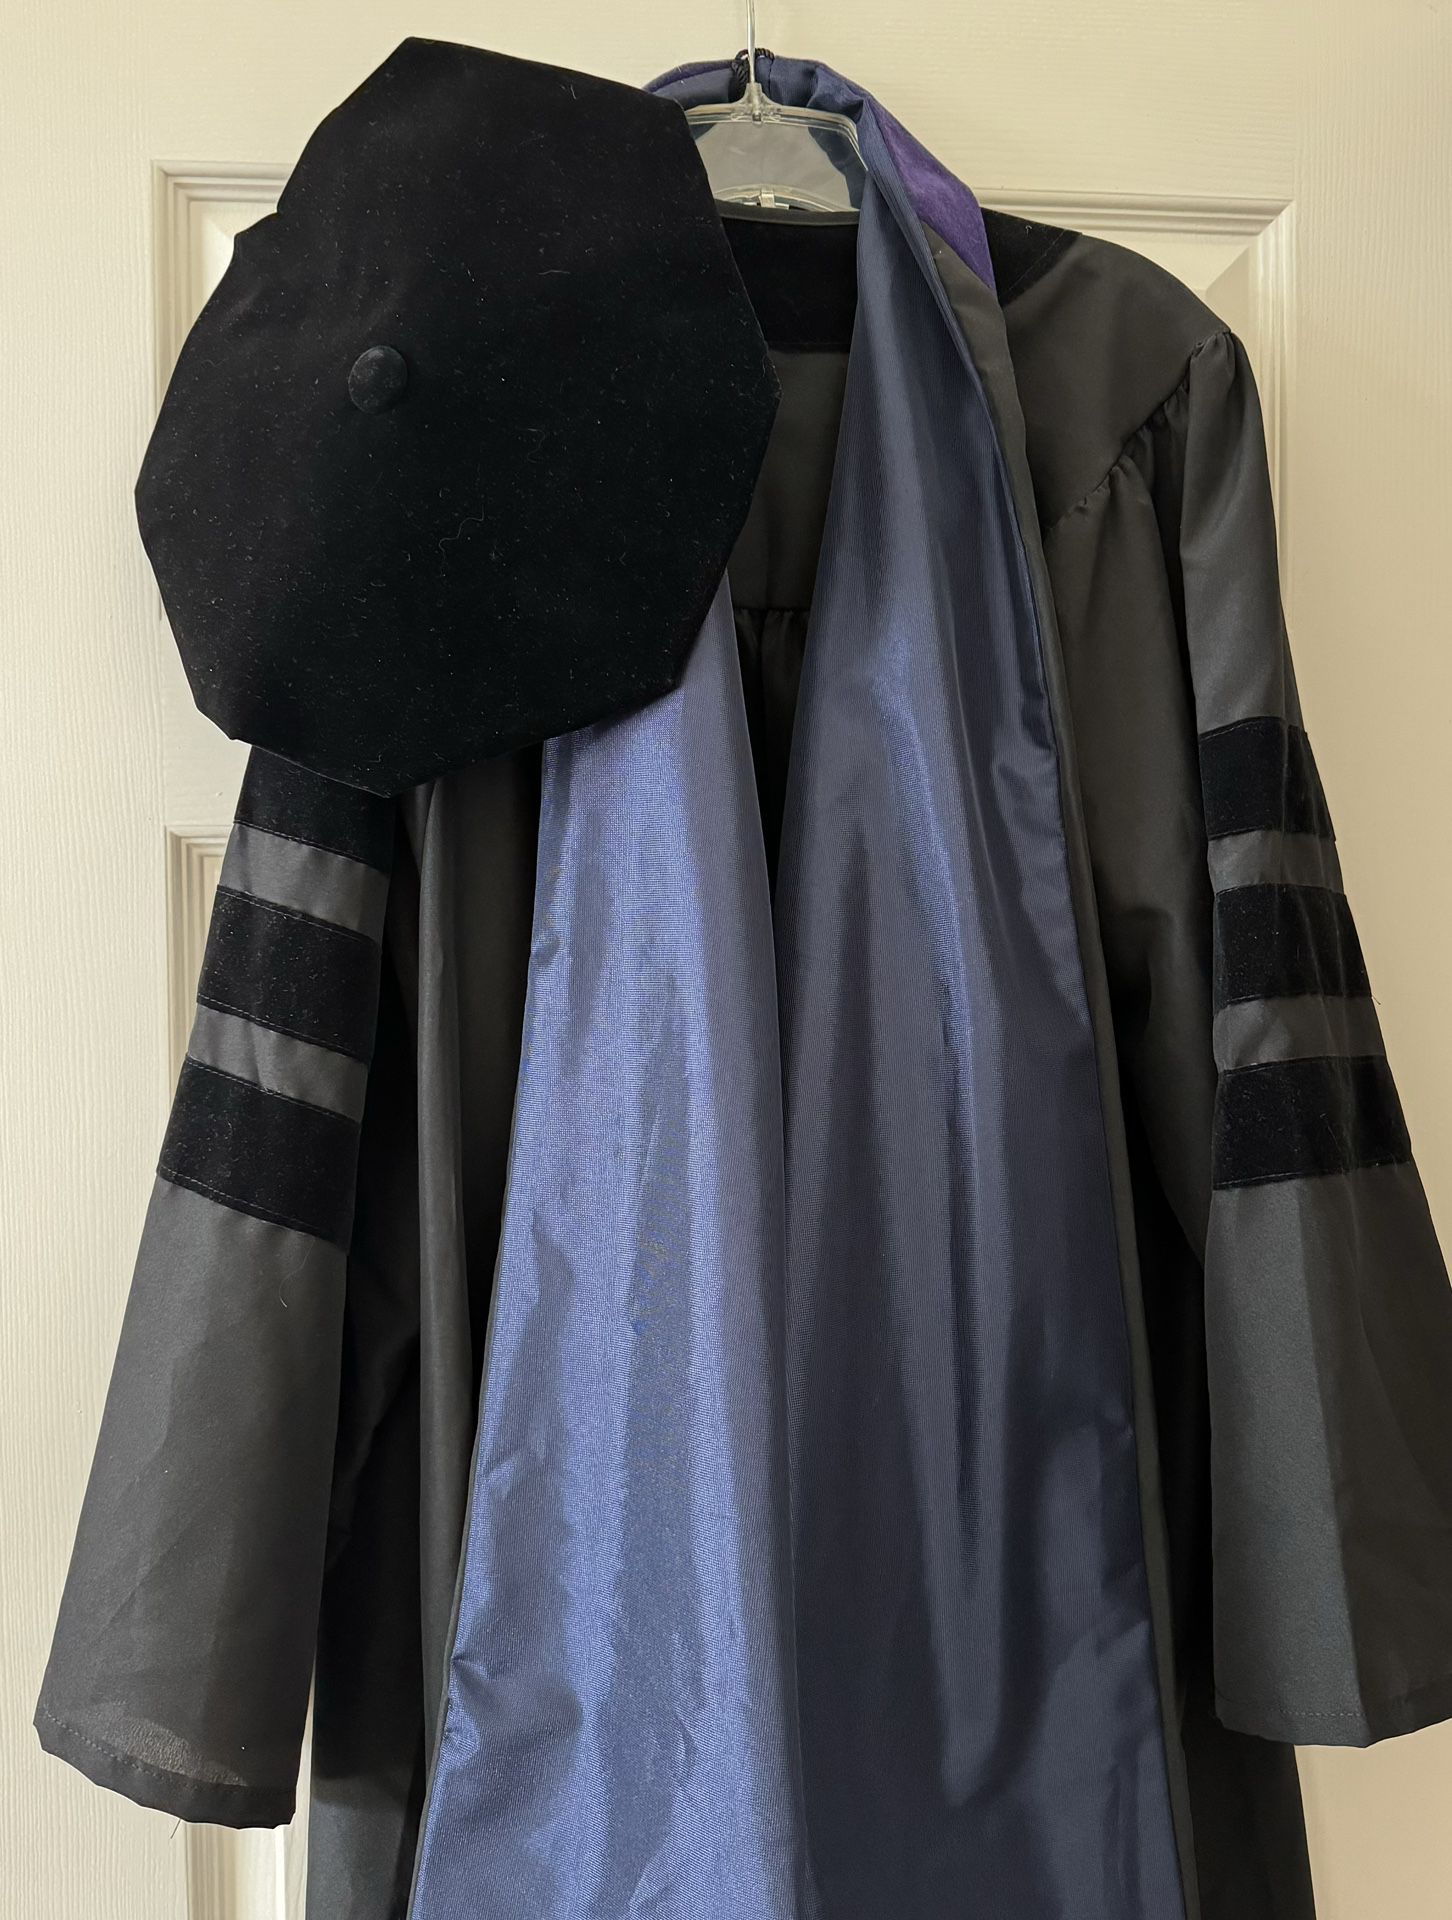 Black Graduation Gown, Cap and Good